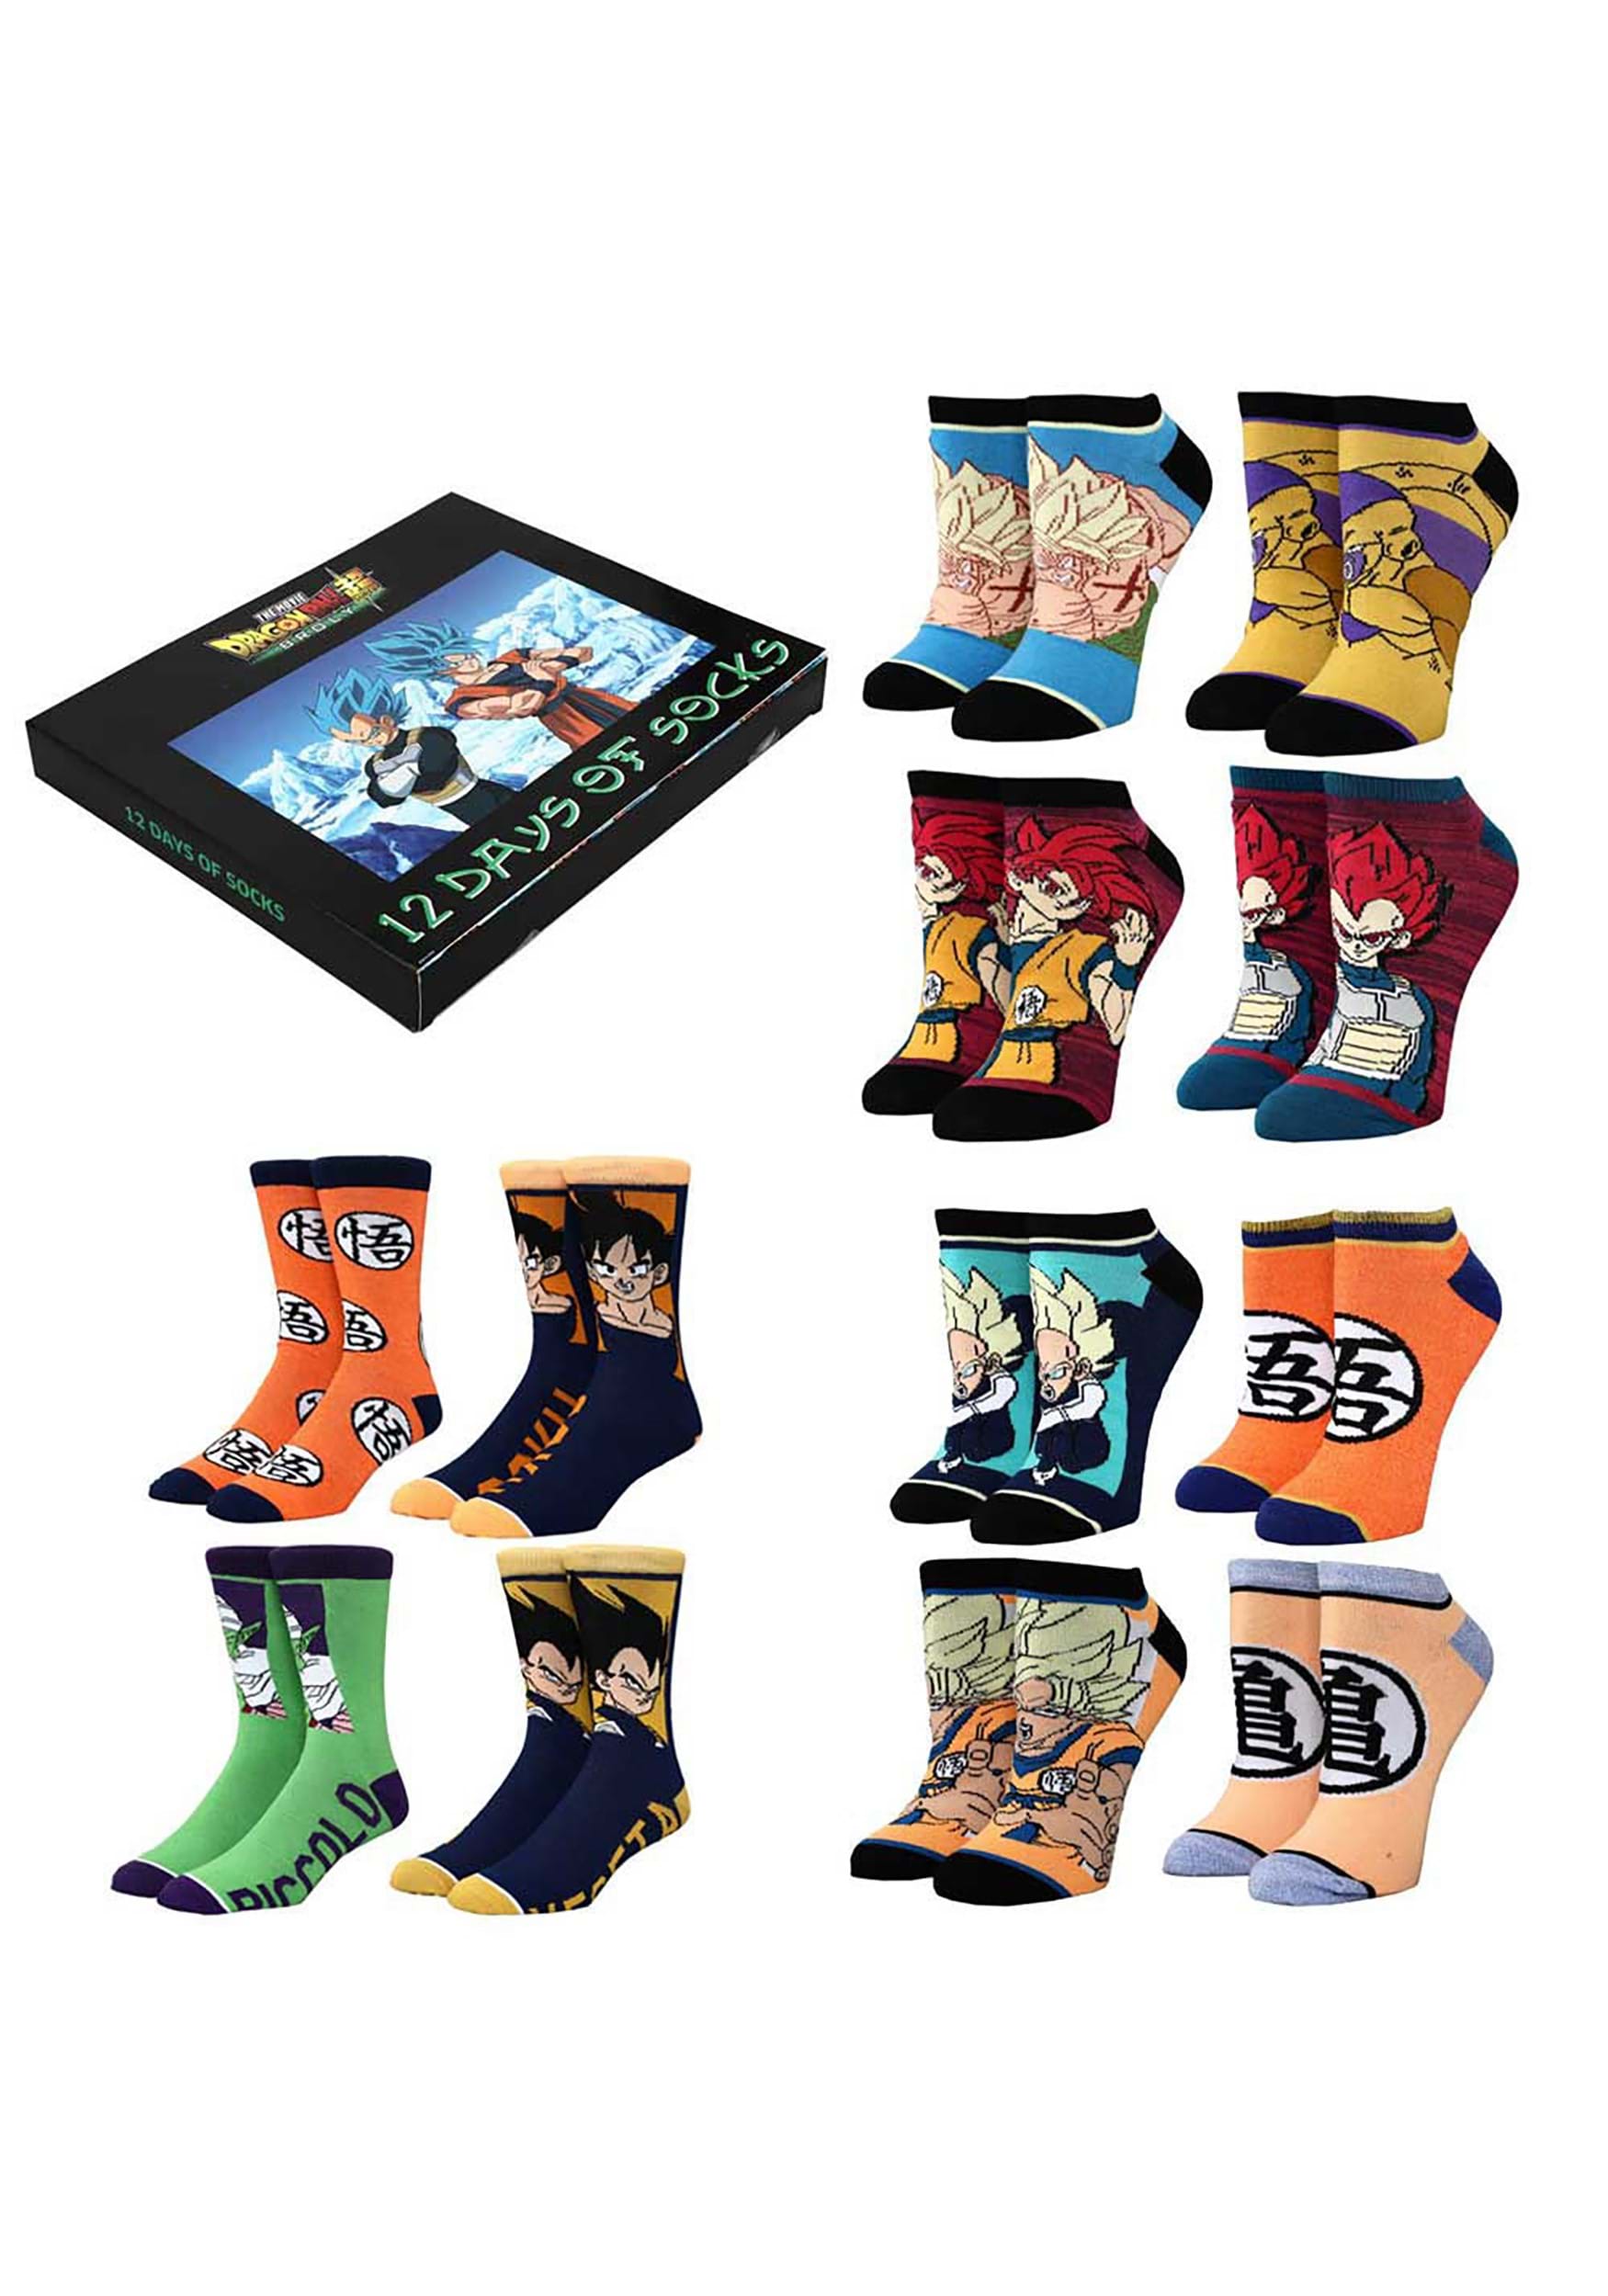 Broly Dragon Ball Z 12 Days of Socks Box Set